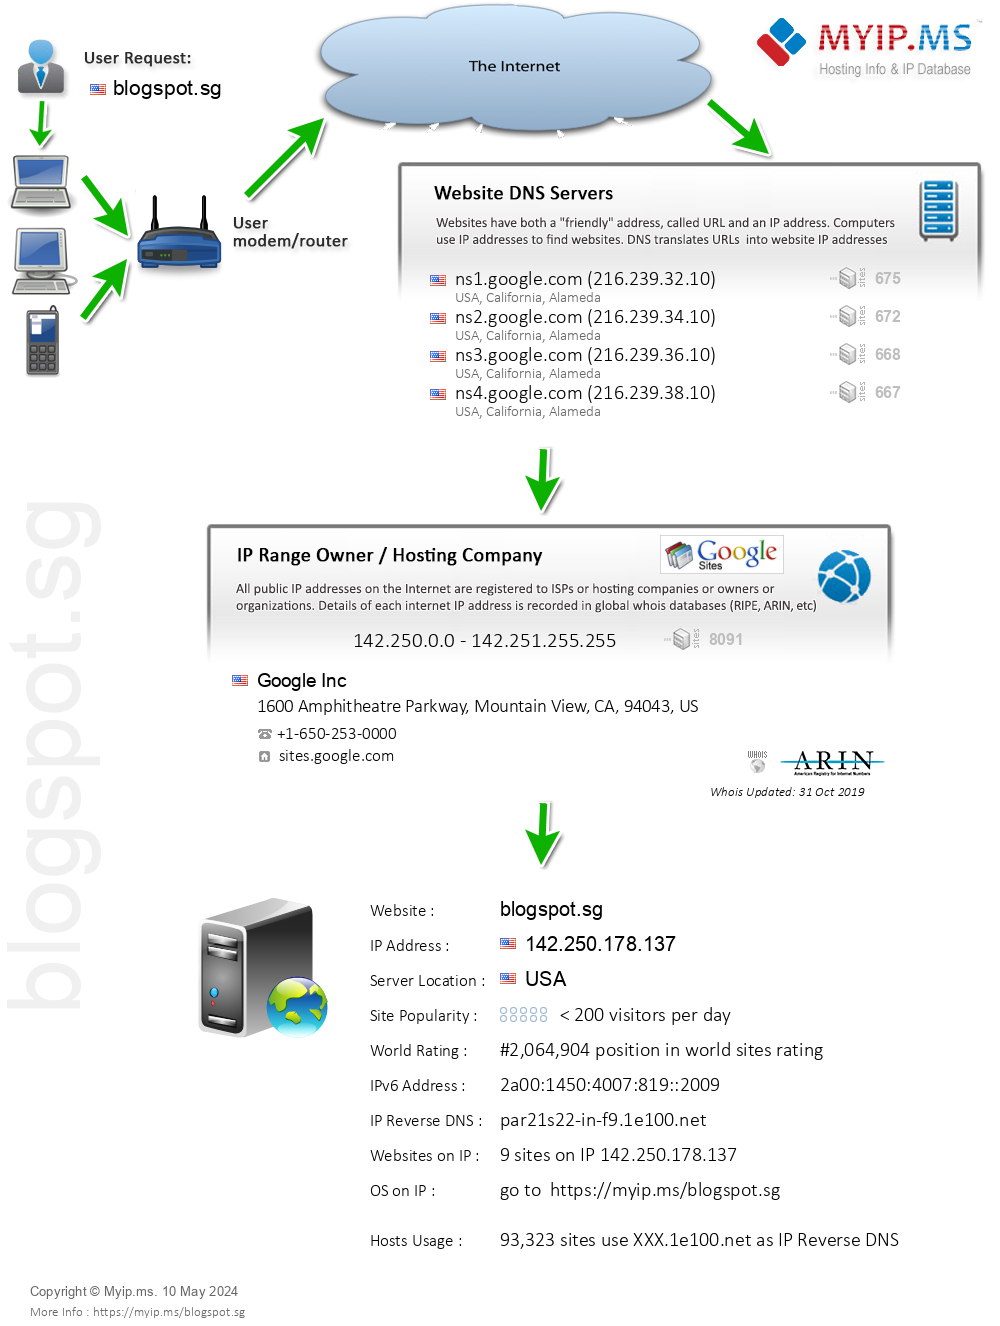 Blogspot.sg - Website Hosting Visual IP Diagram